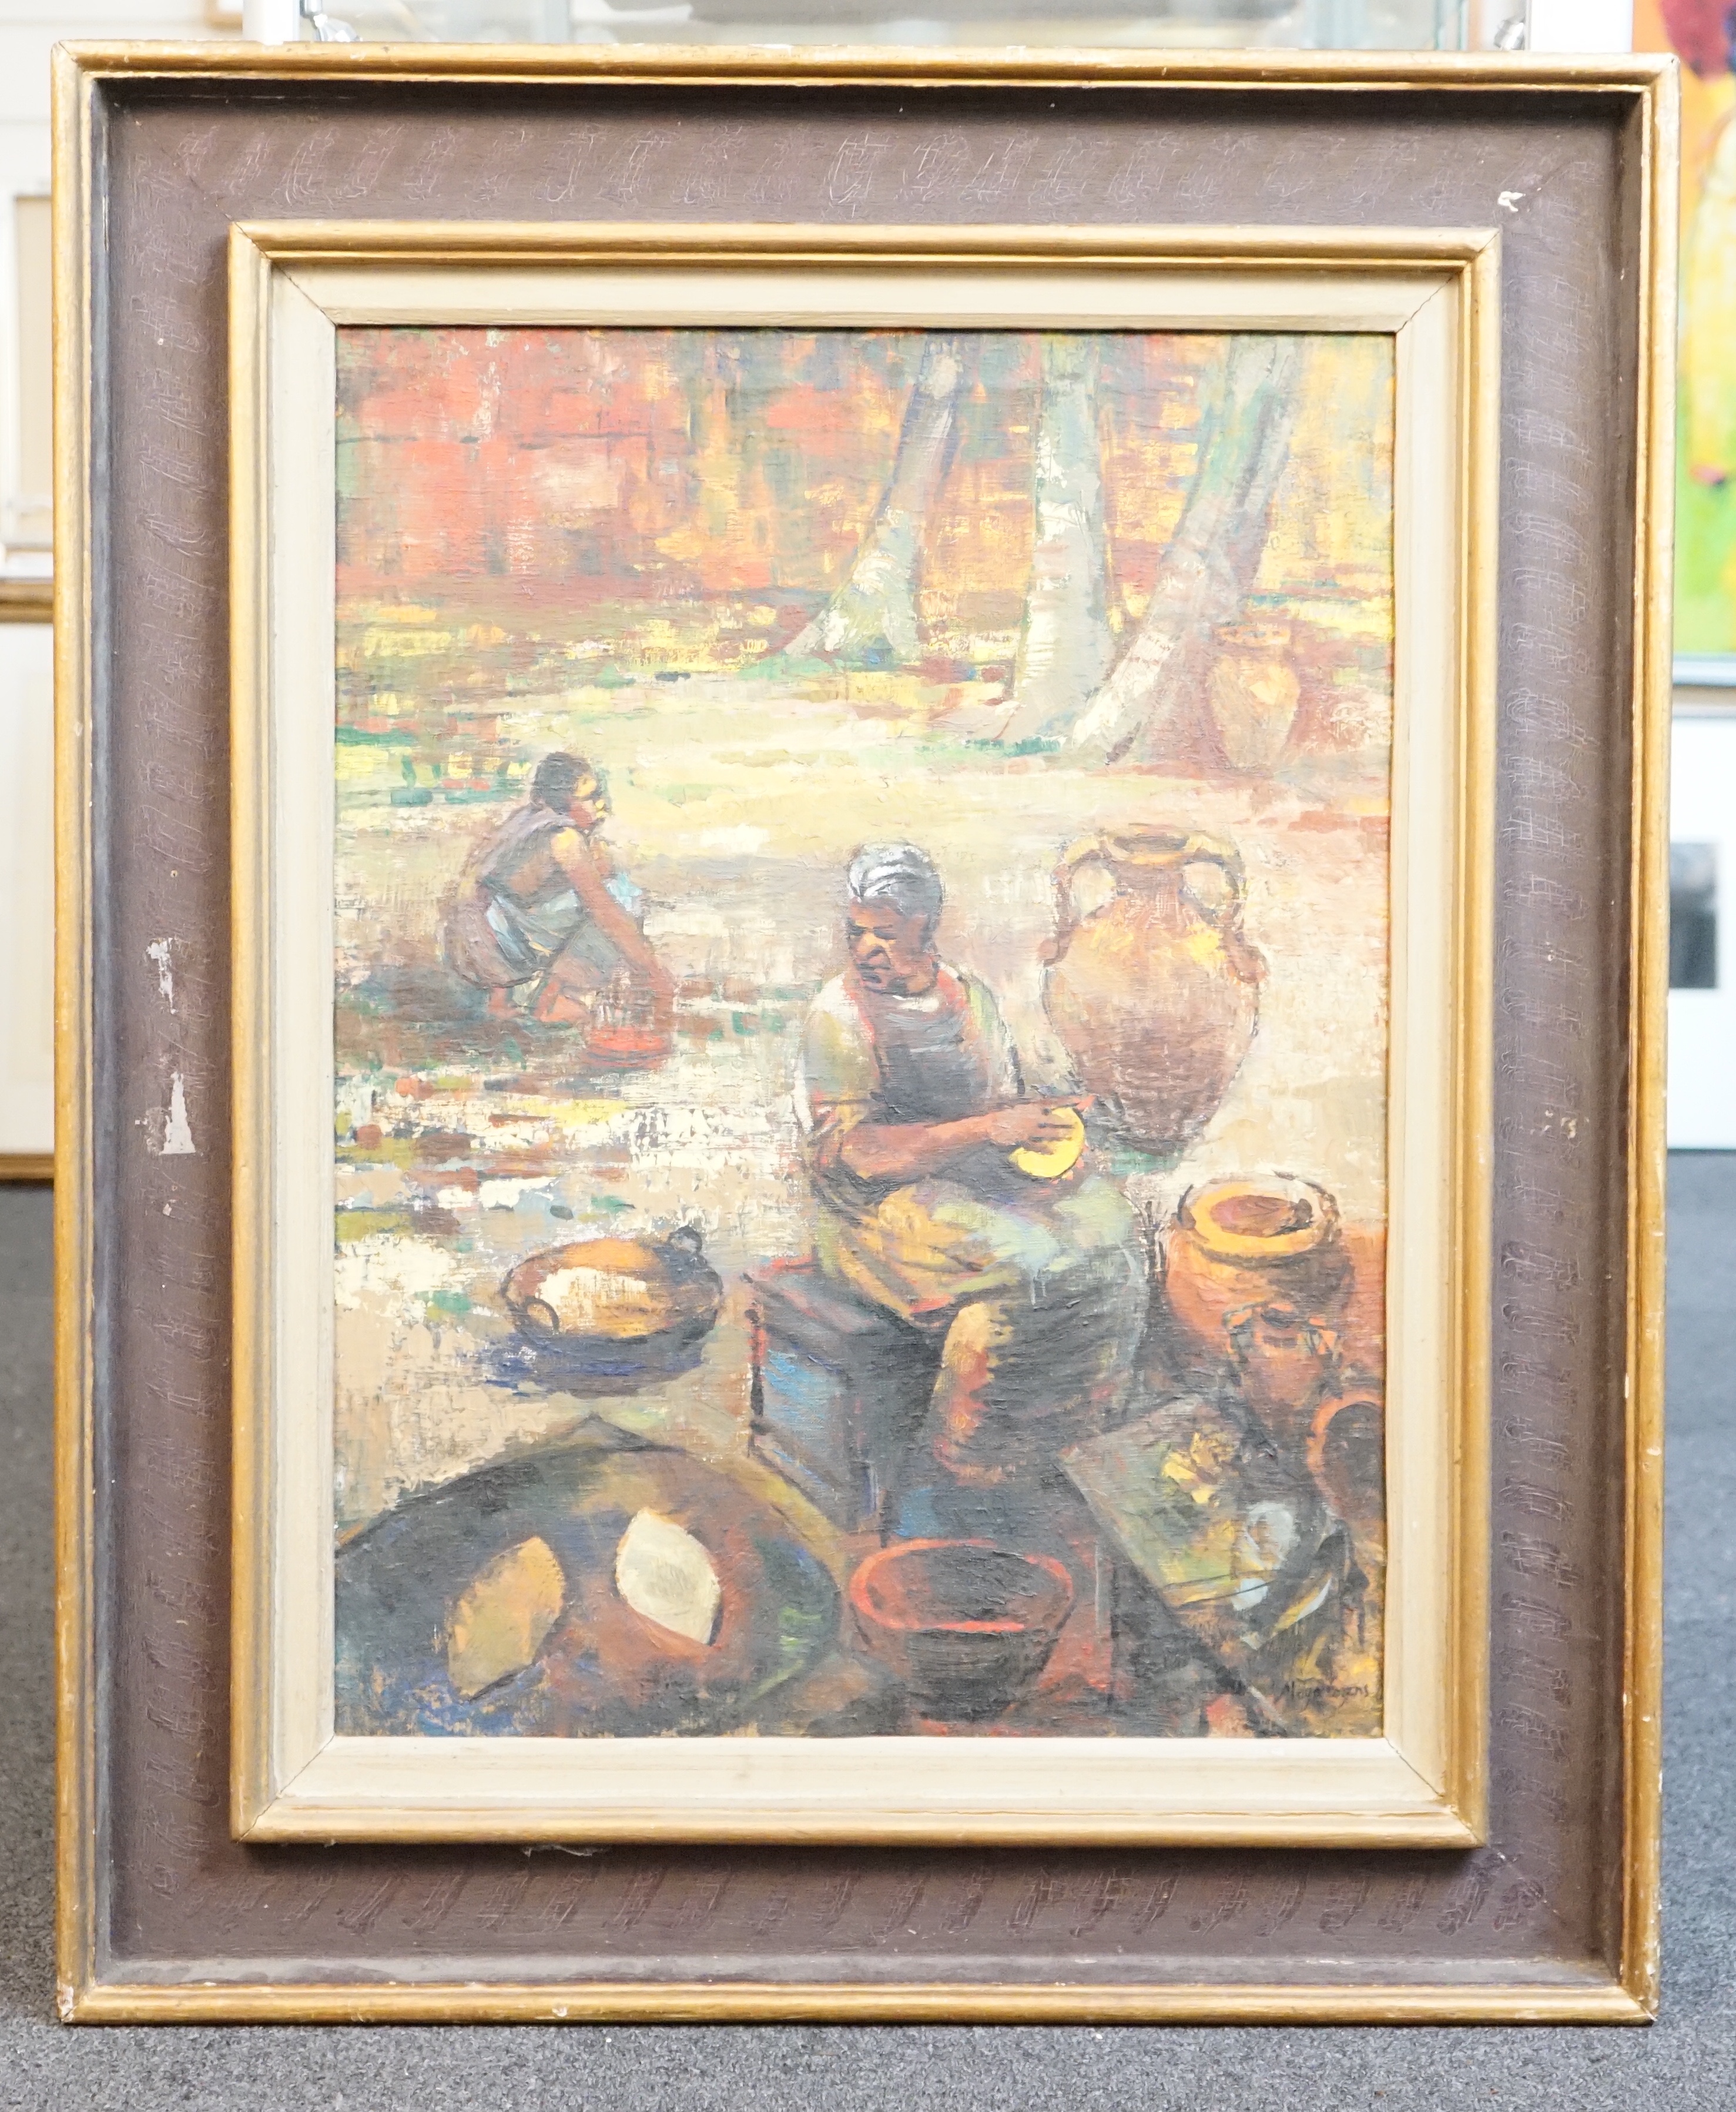 Moya Cozens (1920-1990), 'Jamaican Tortilla Maker', oil on canvas, 60 x 45cm